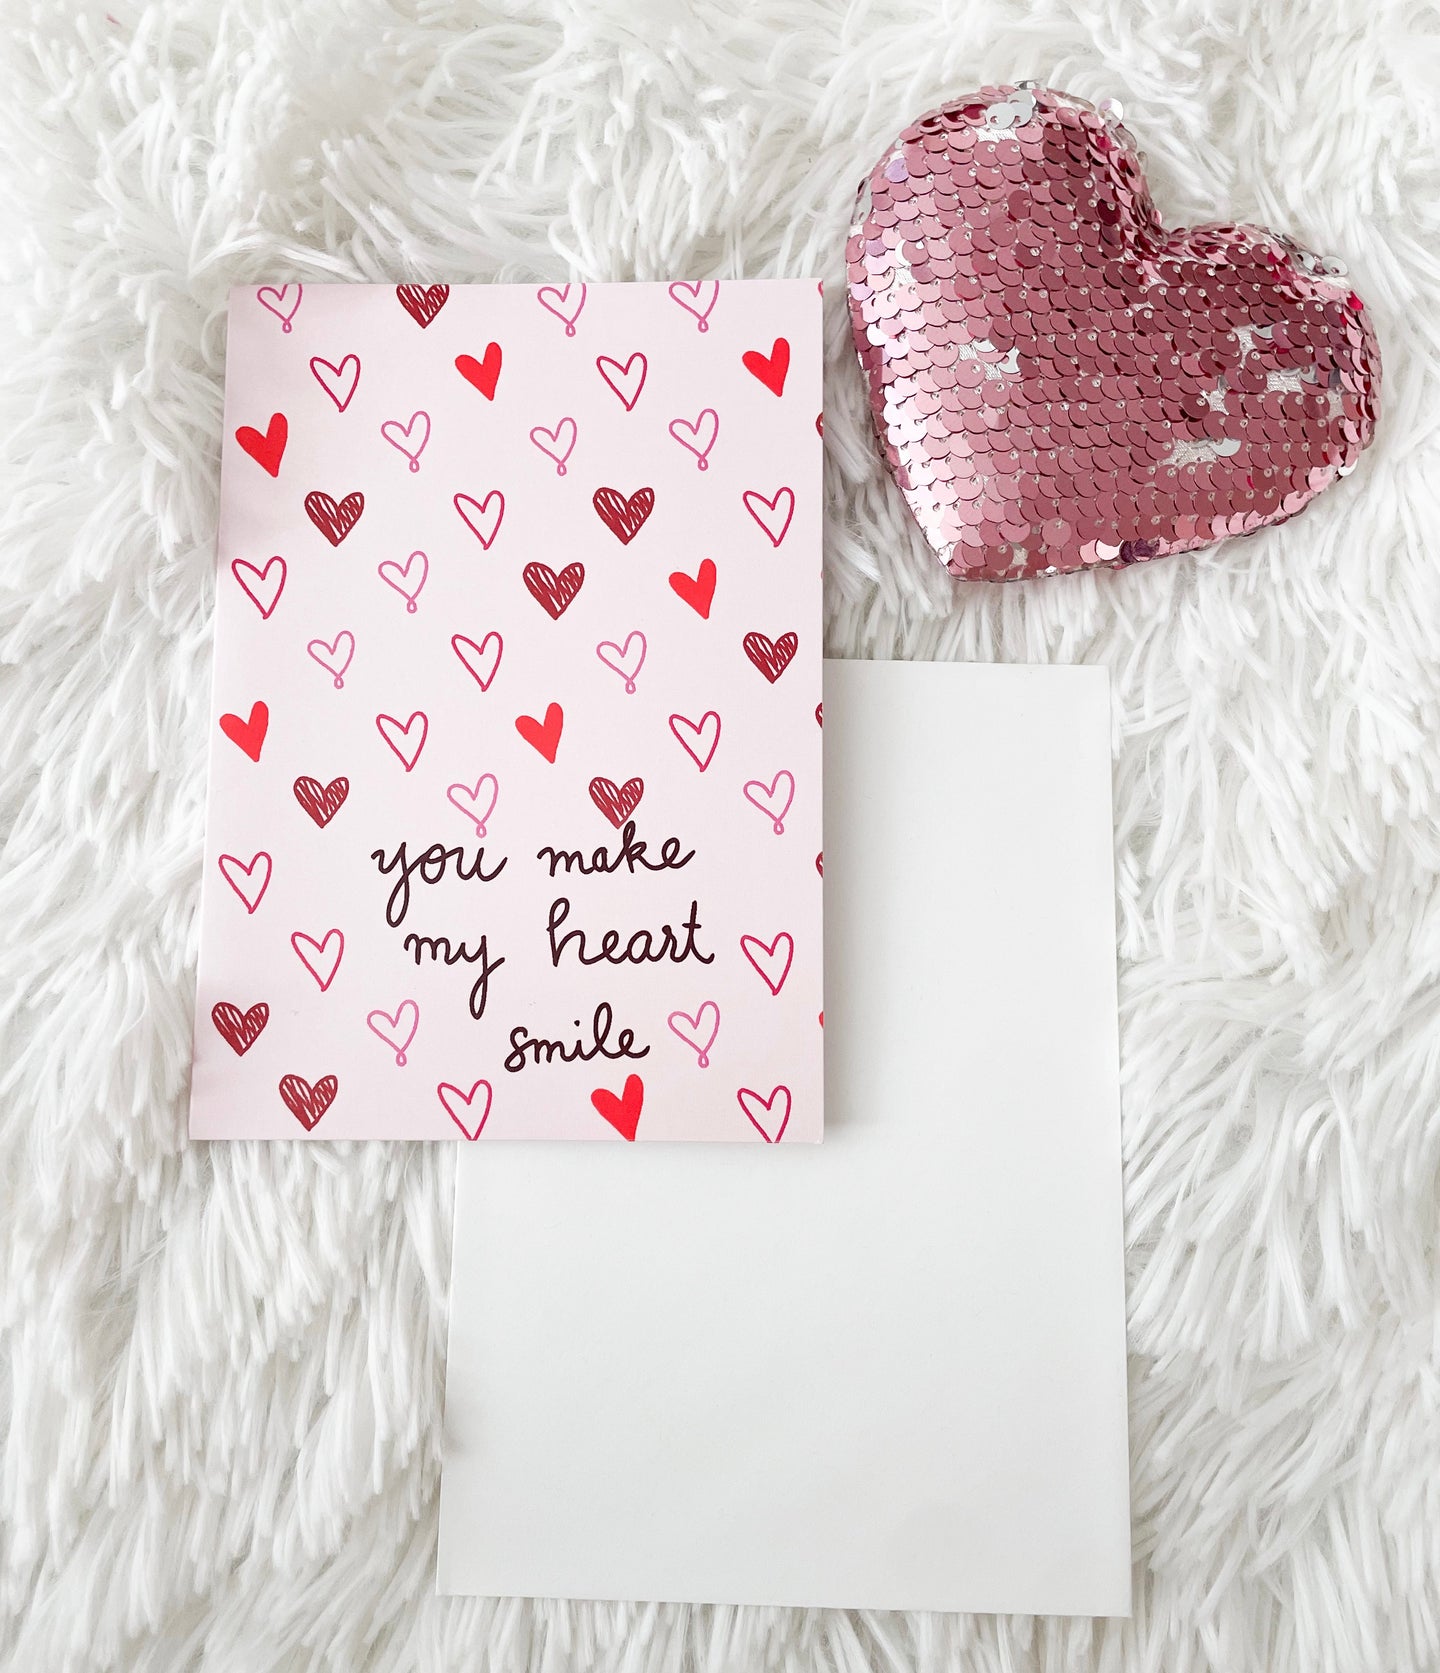 V-day Greeting Card